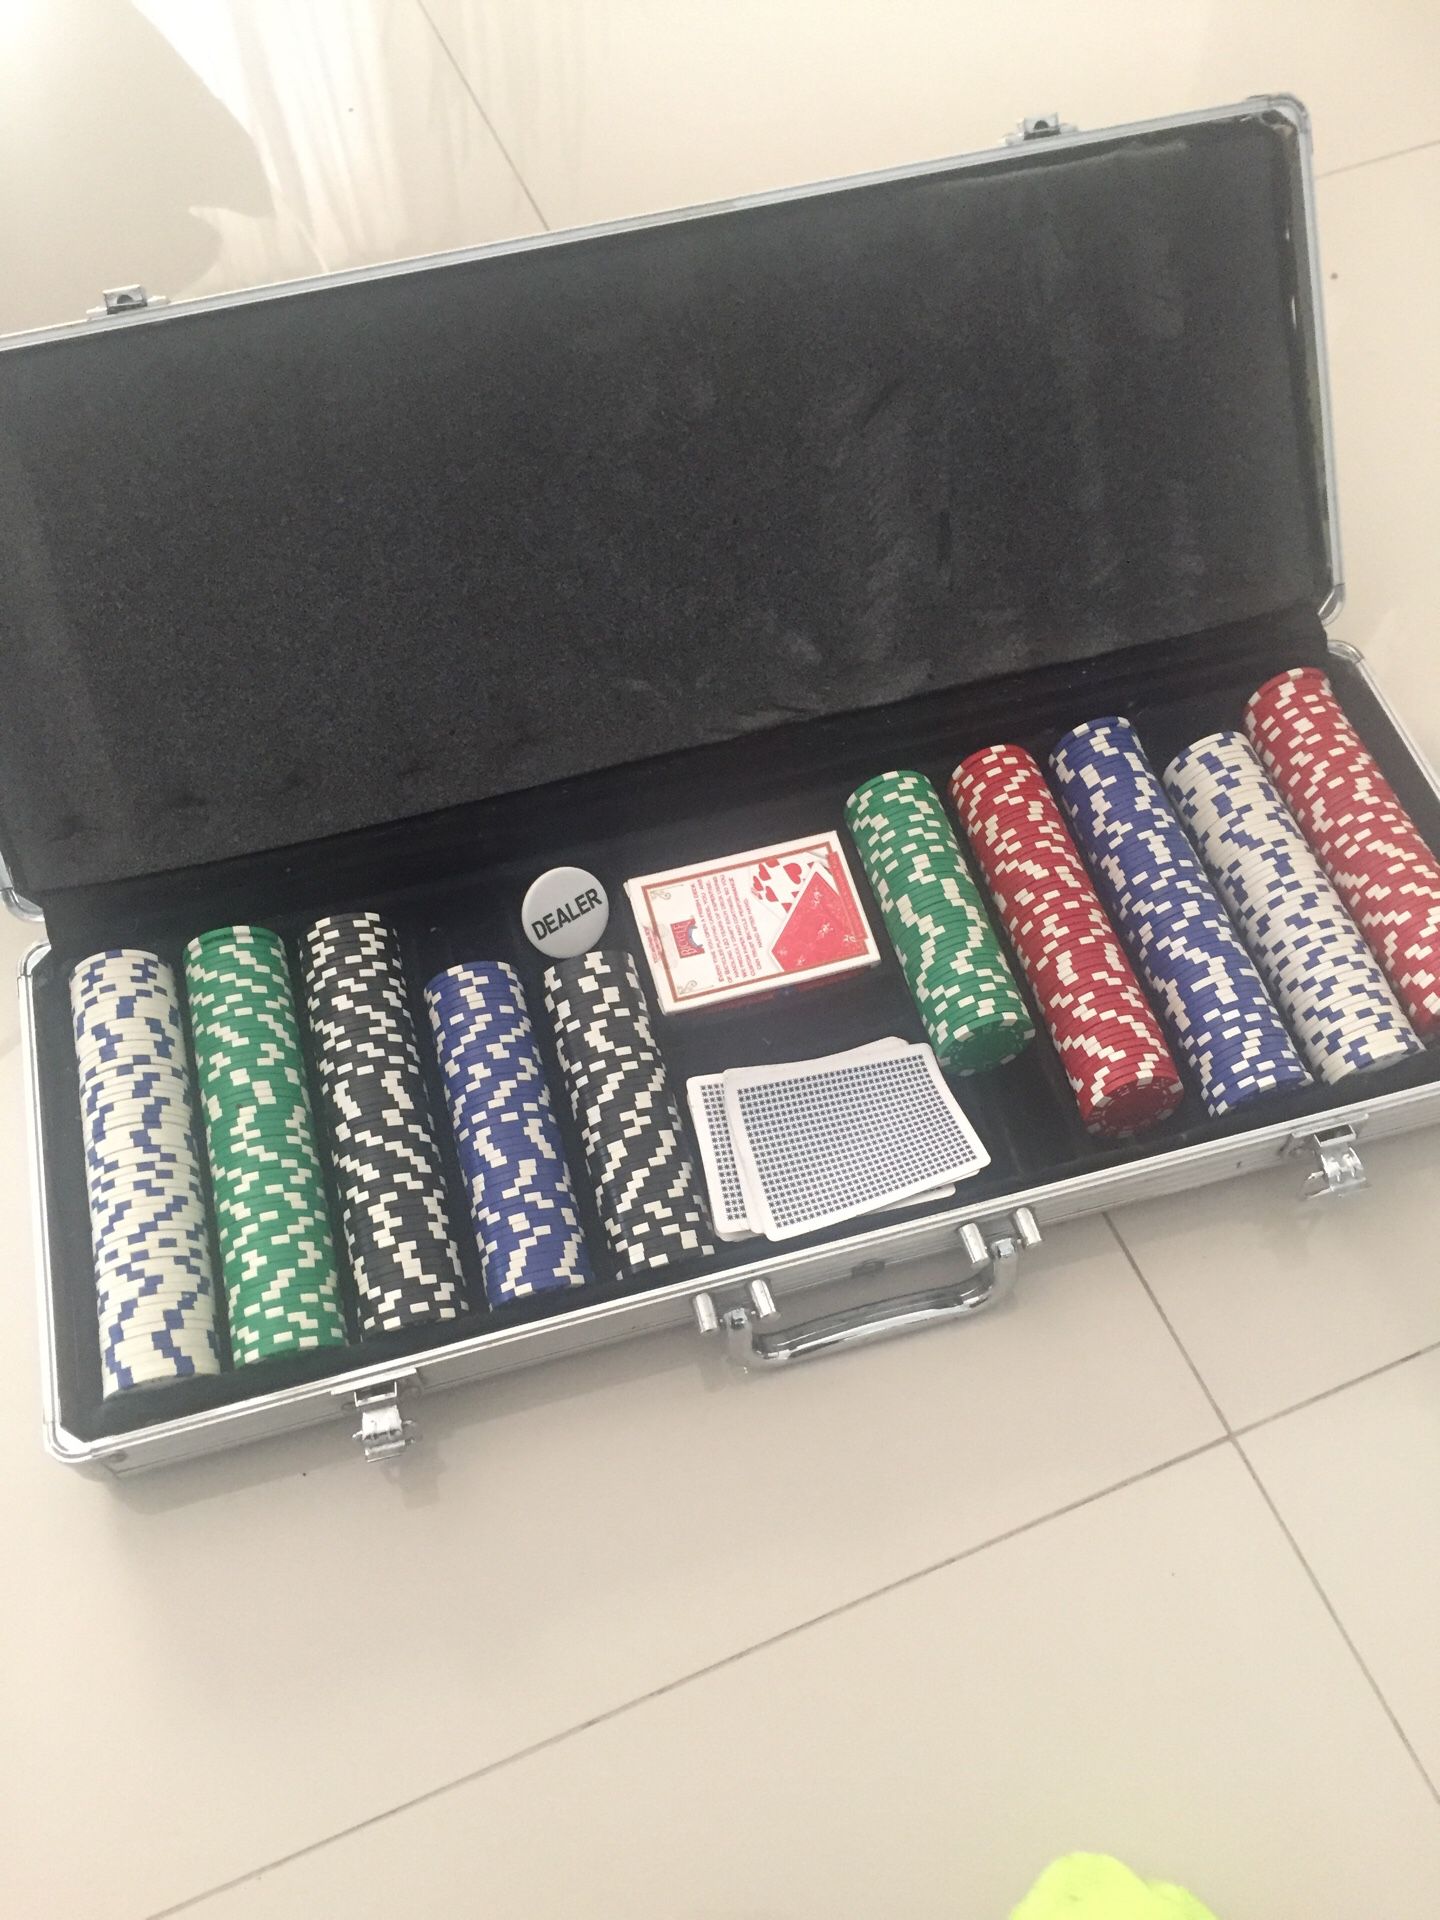 Juego de póker